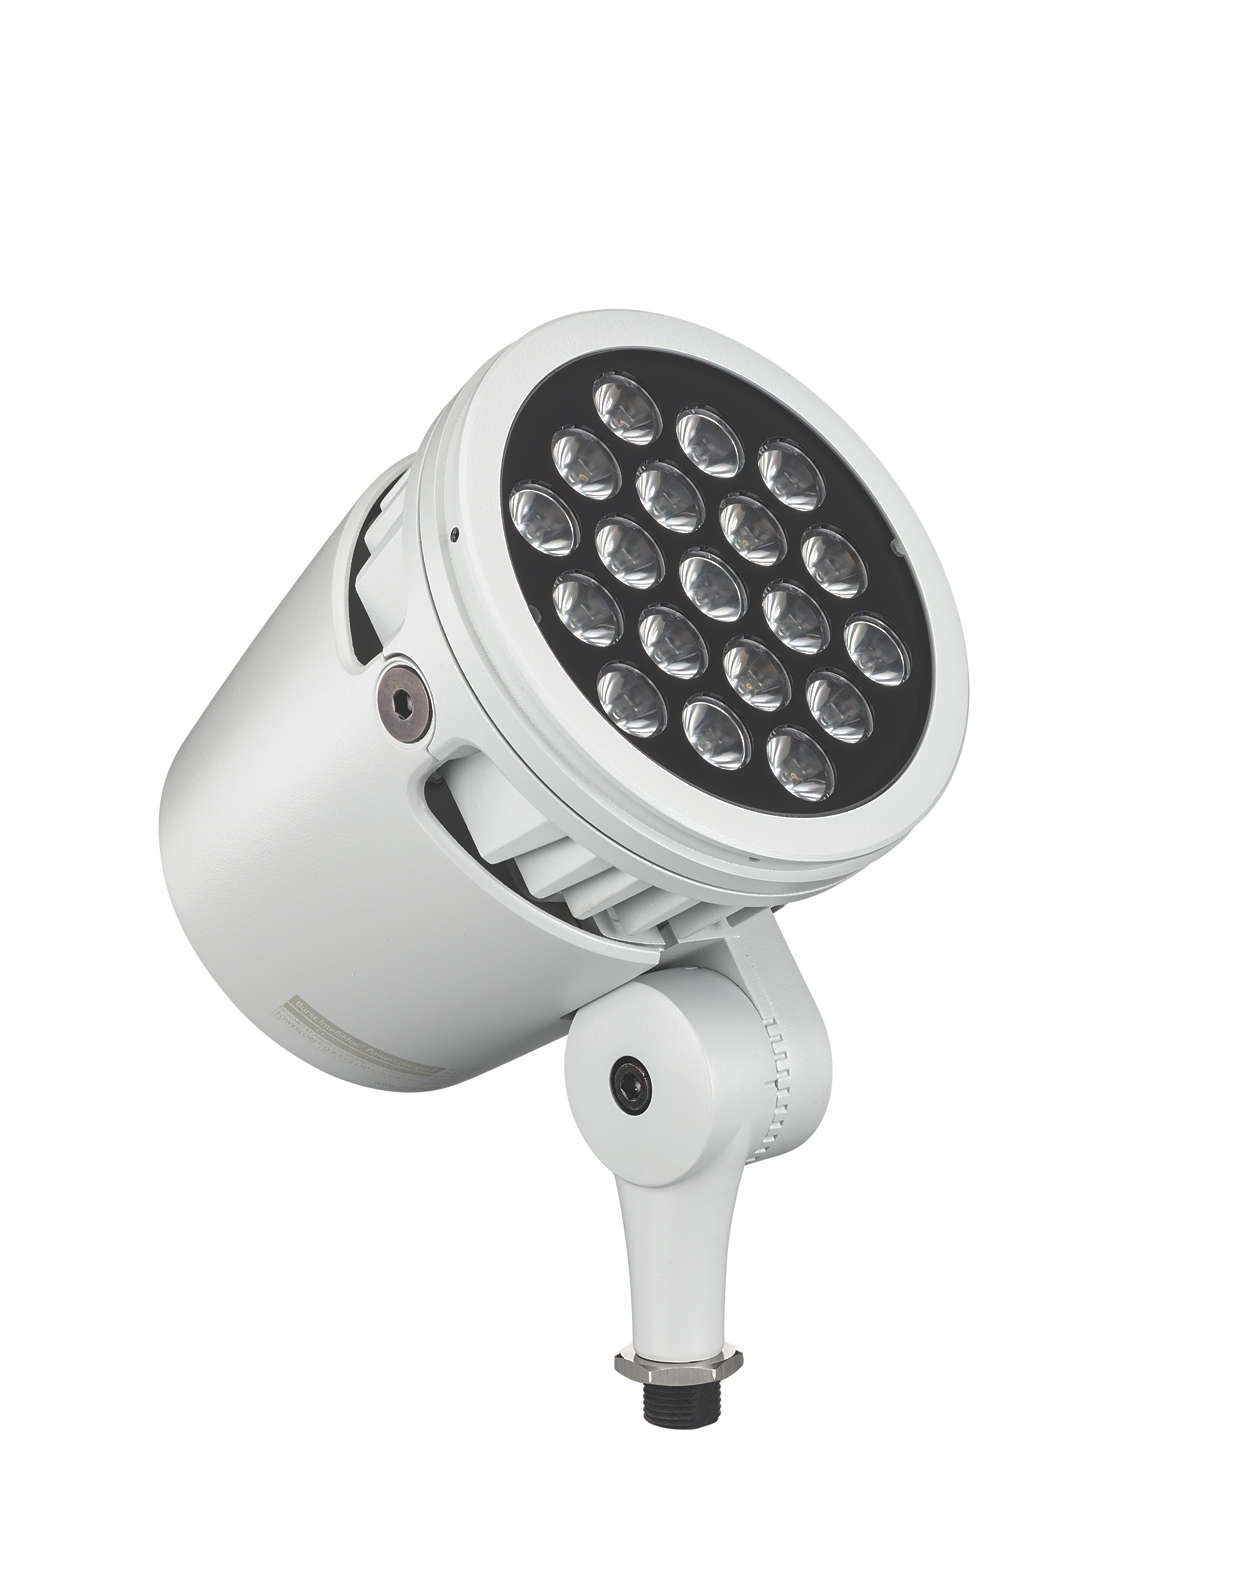 Architecturale LED-spotlight met intelligent wit en gekleurd licht